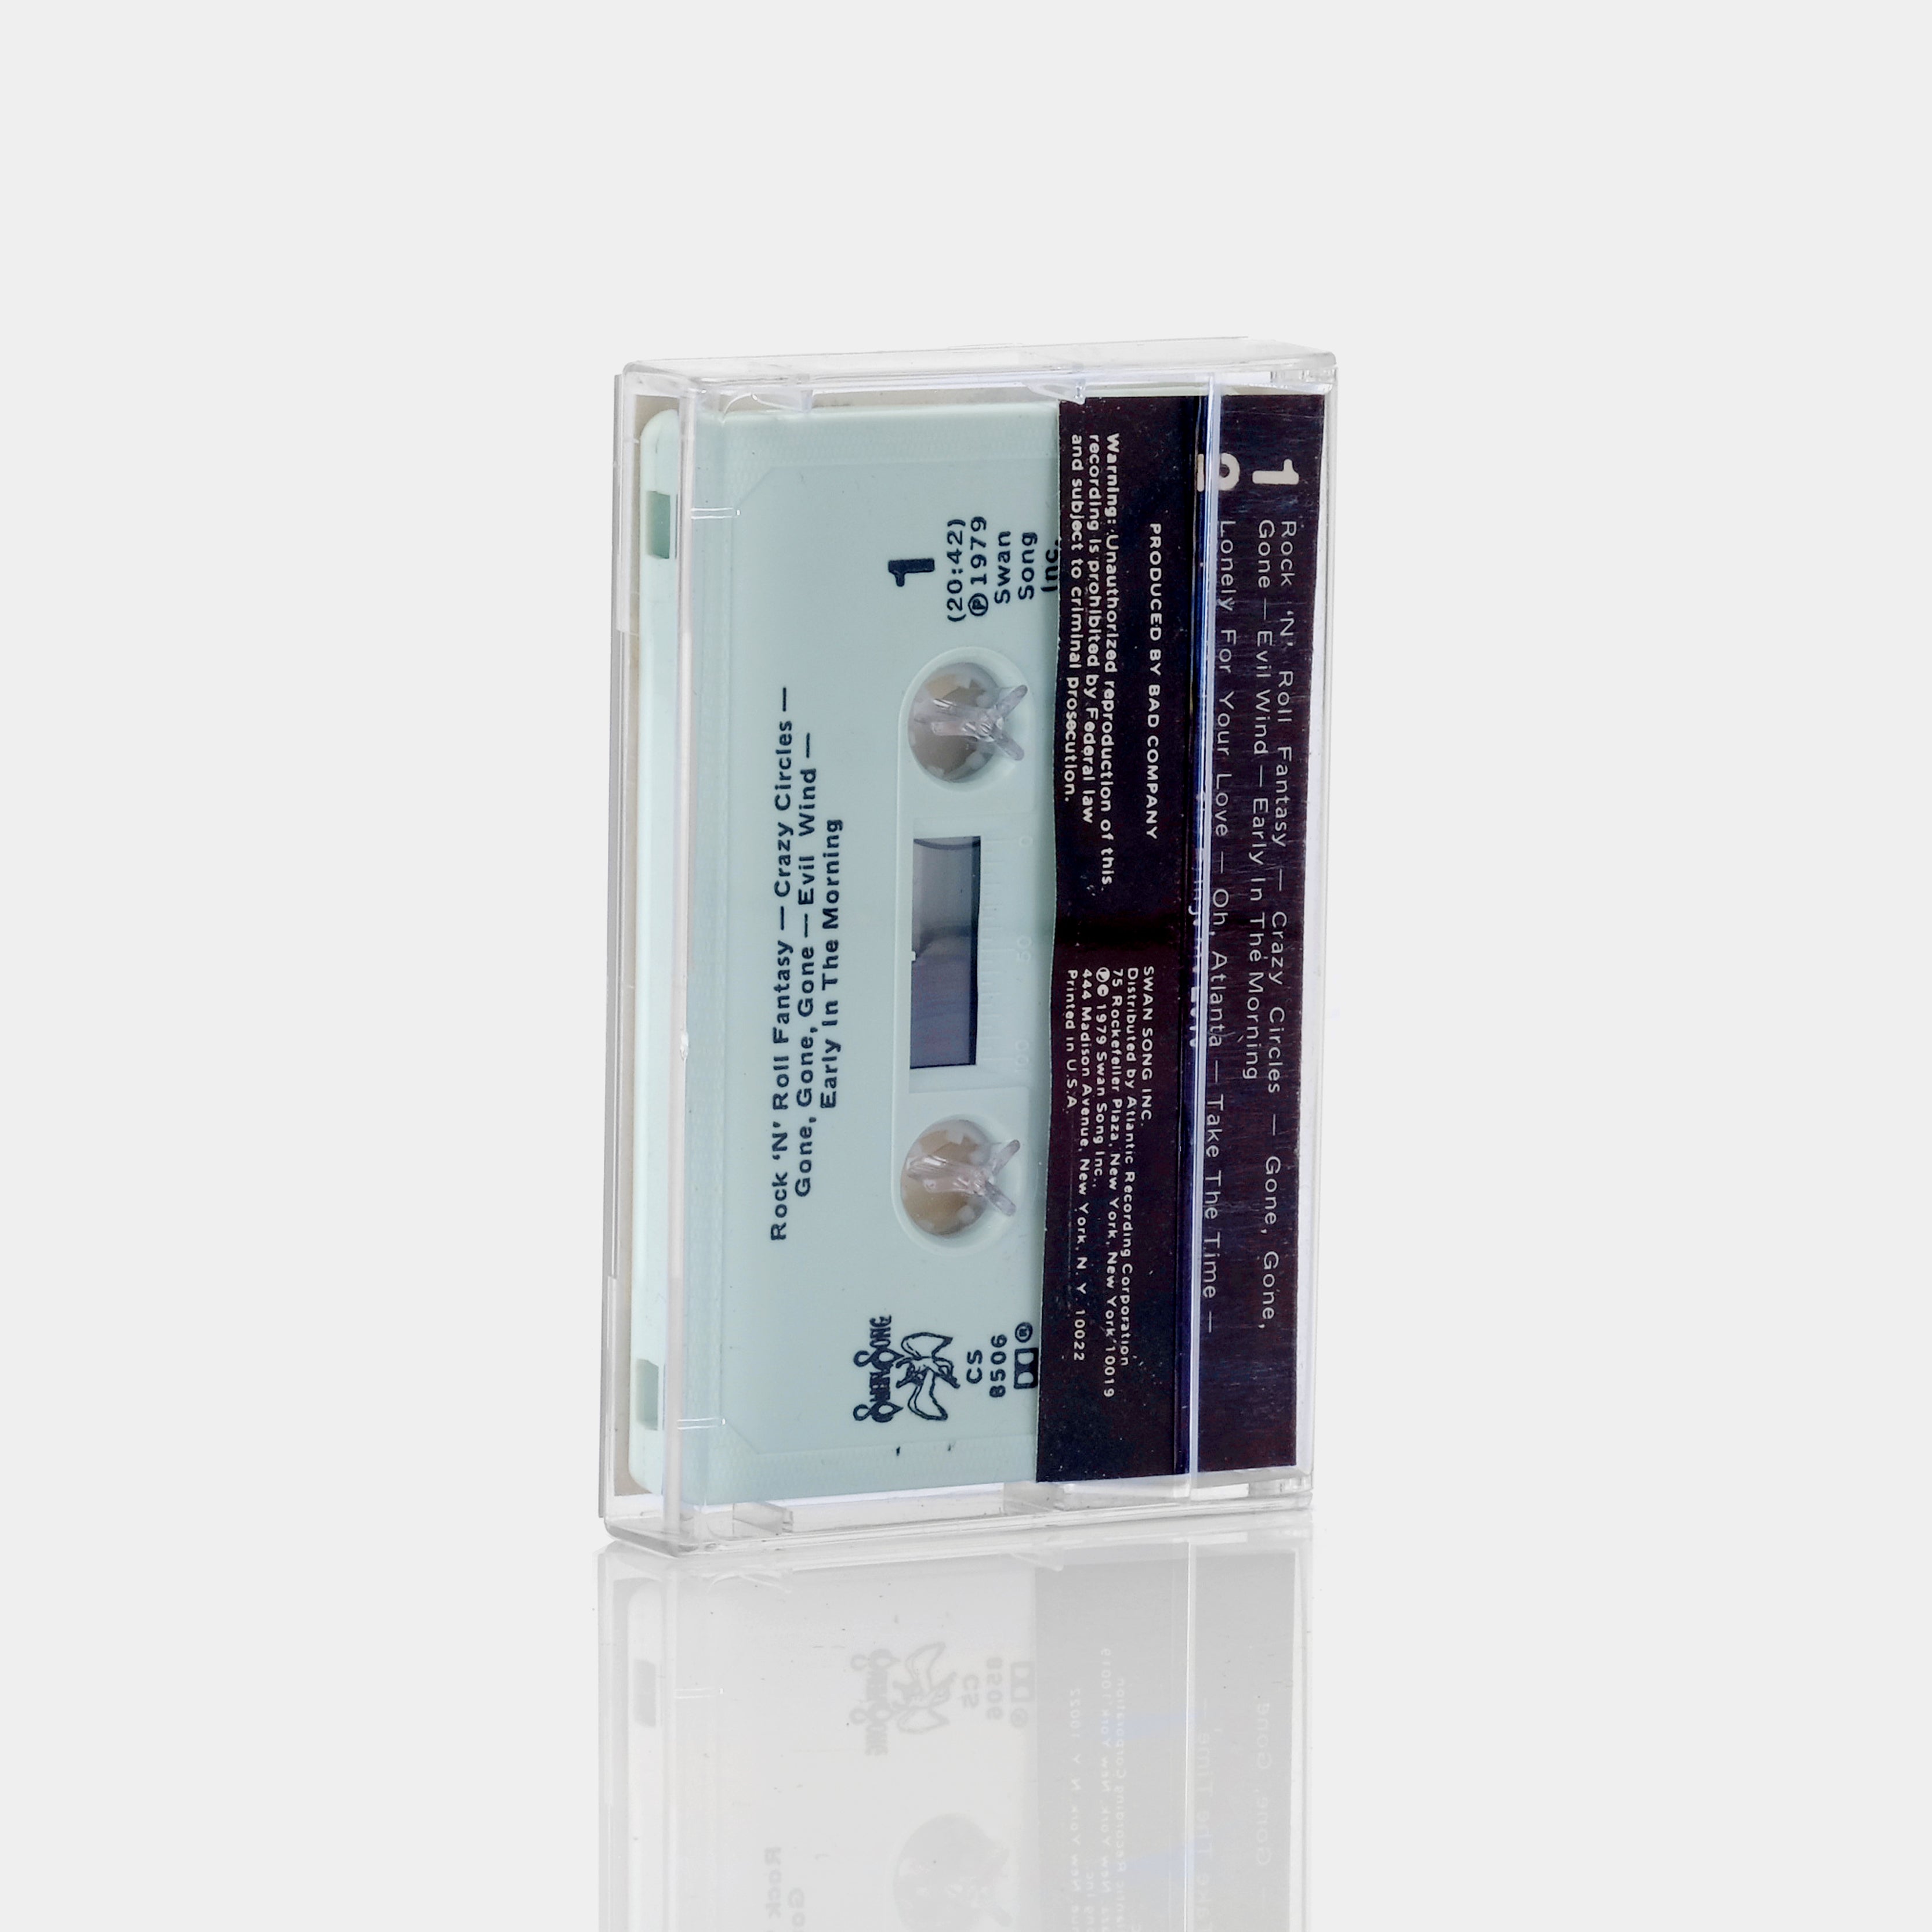 Bad Company - Desolation Angels Cassette Tape